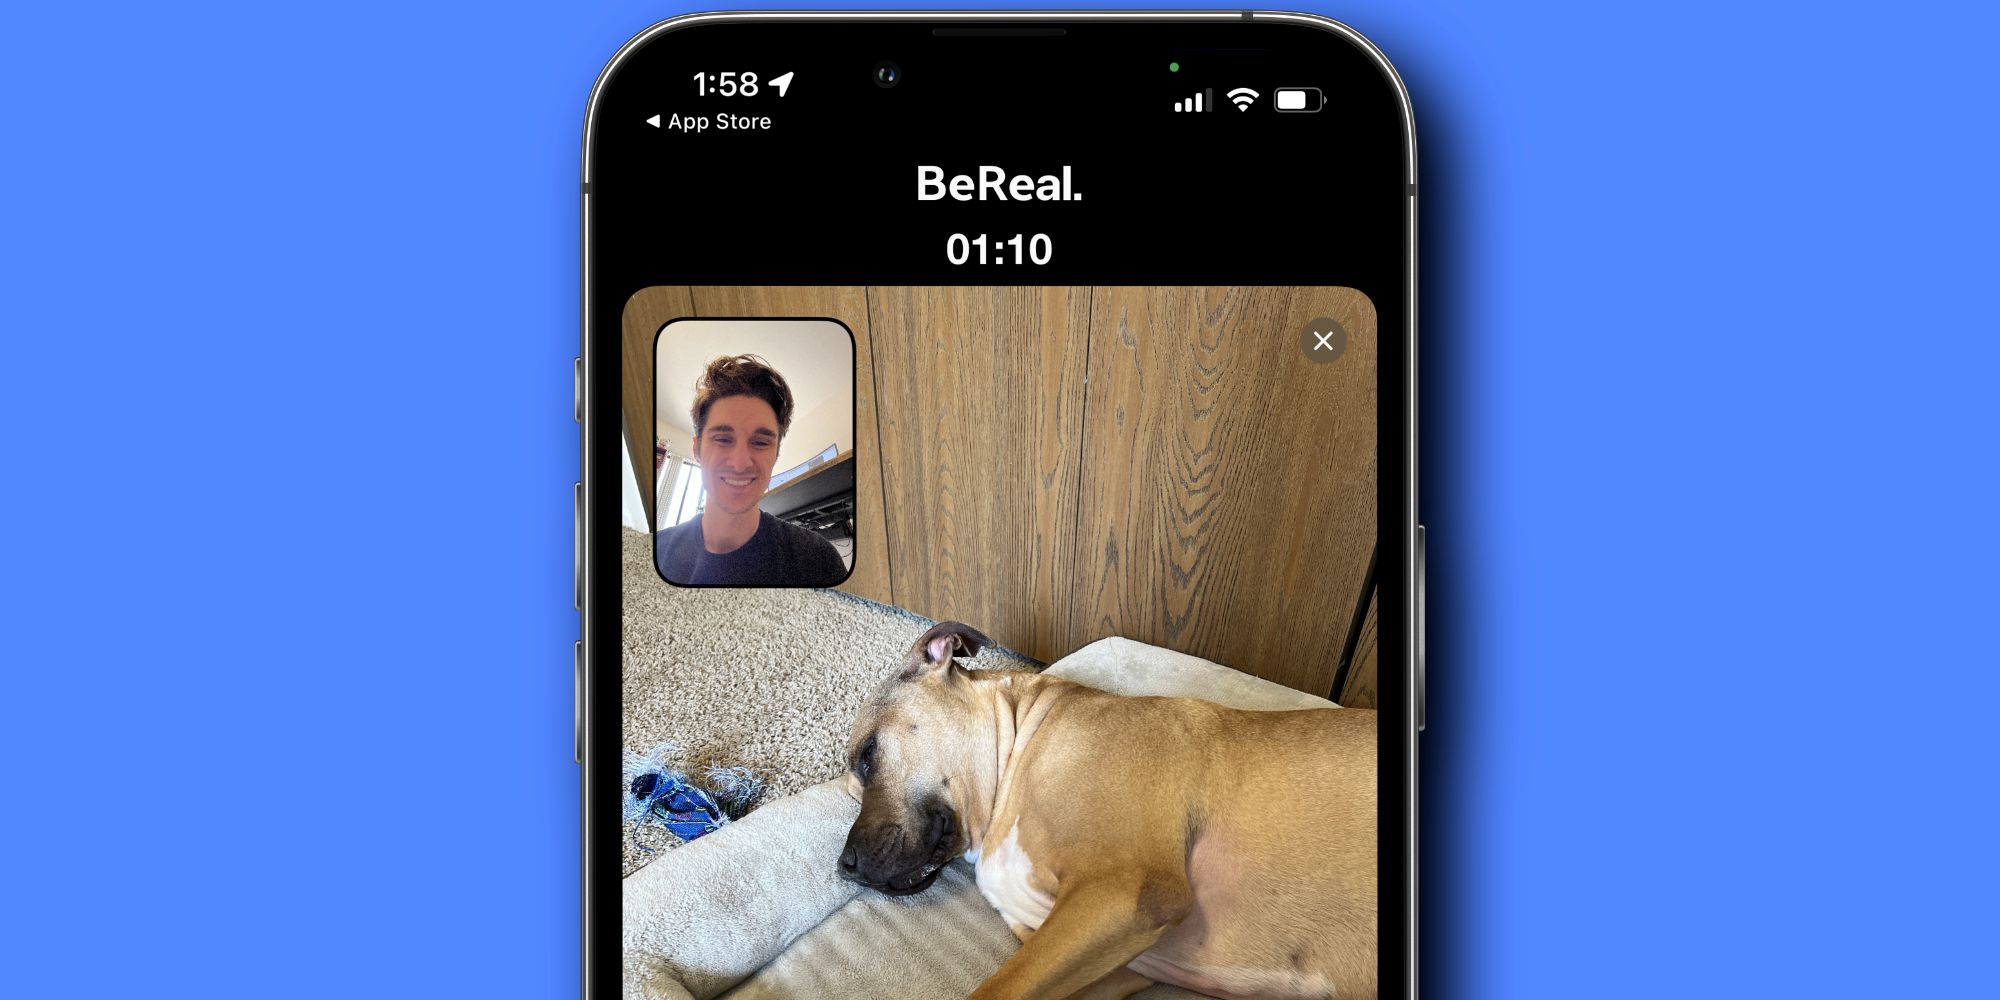 The BeReal app